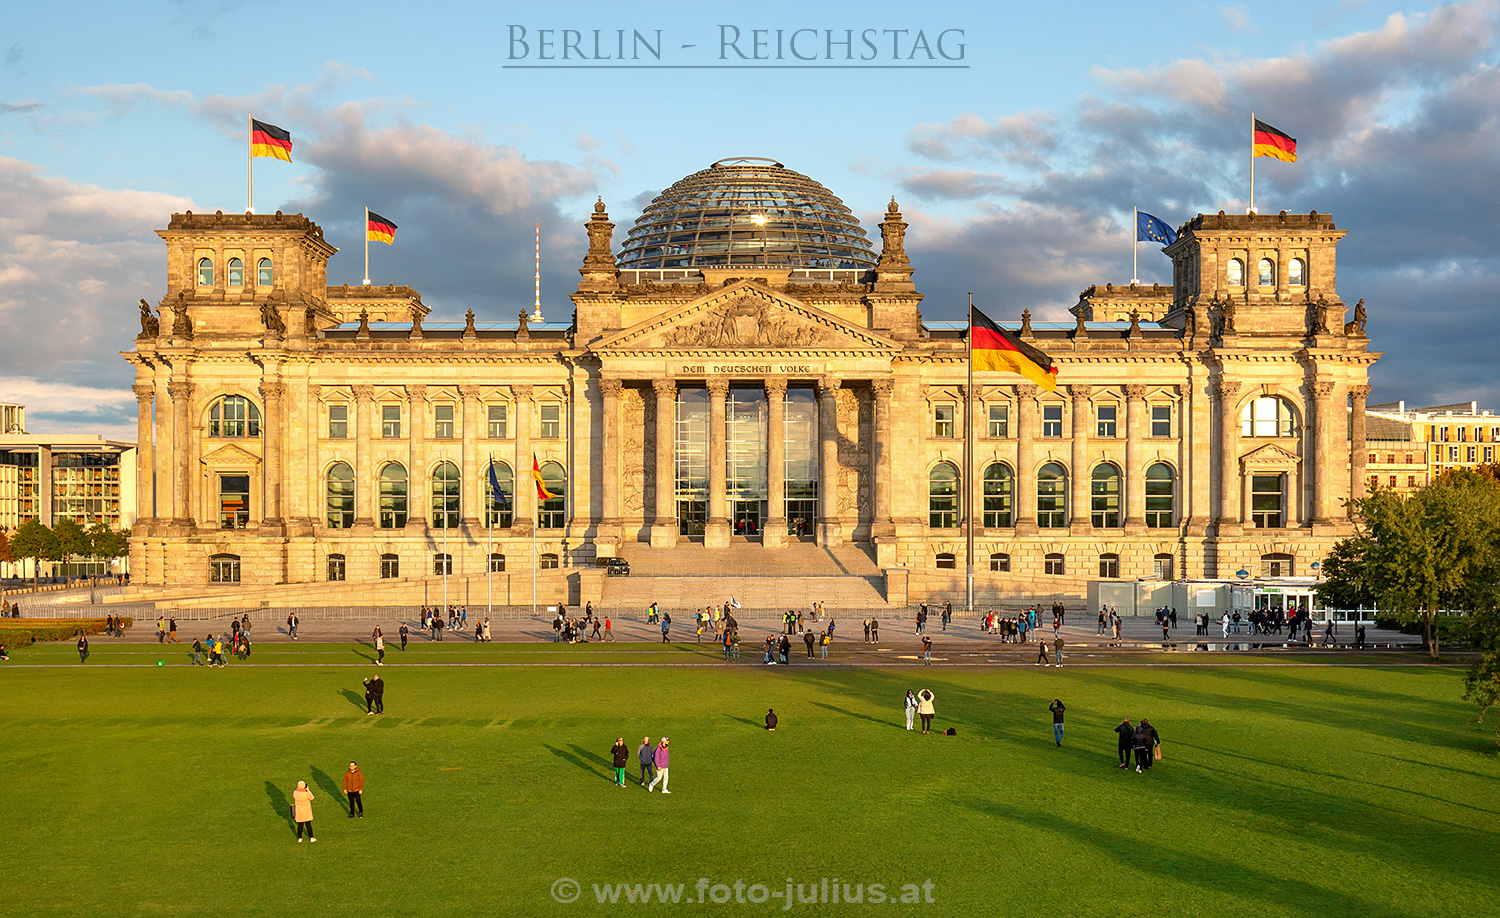 105a_Berlin_Reichstag.jpg, 767kB